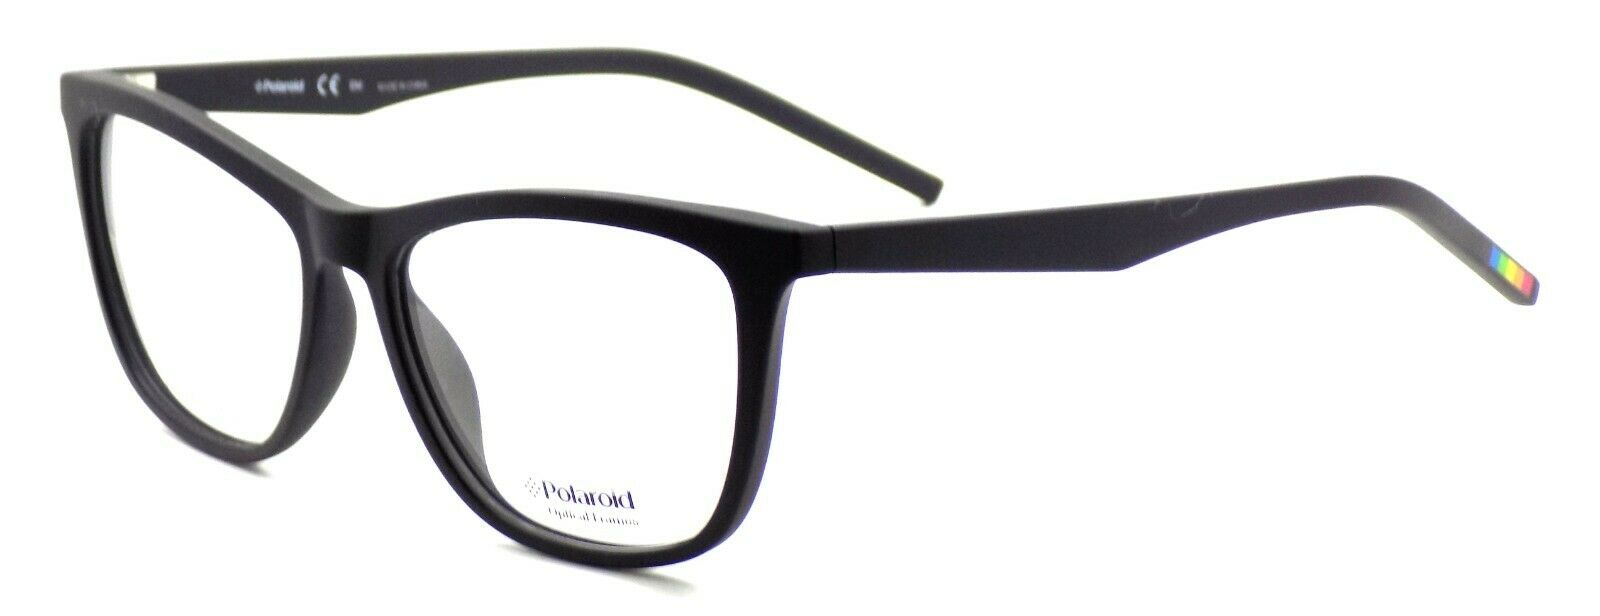 1-Polaroid Core PLD D203 DL5 Women's Eyeglasses Frames 54-16-145 Matte Black +CASE-827886333059-IKSpecs